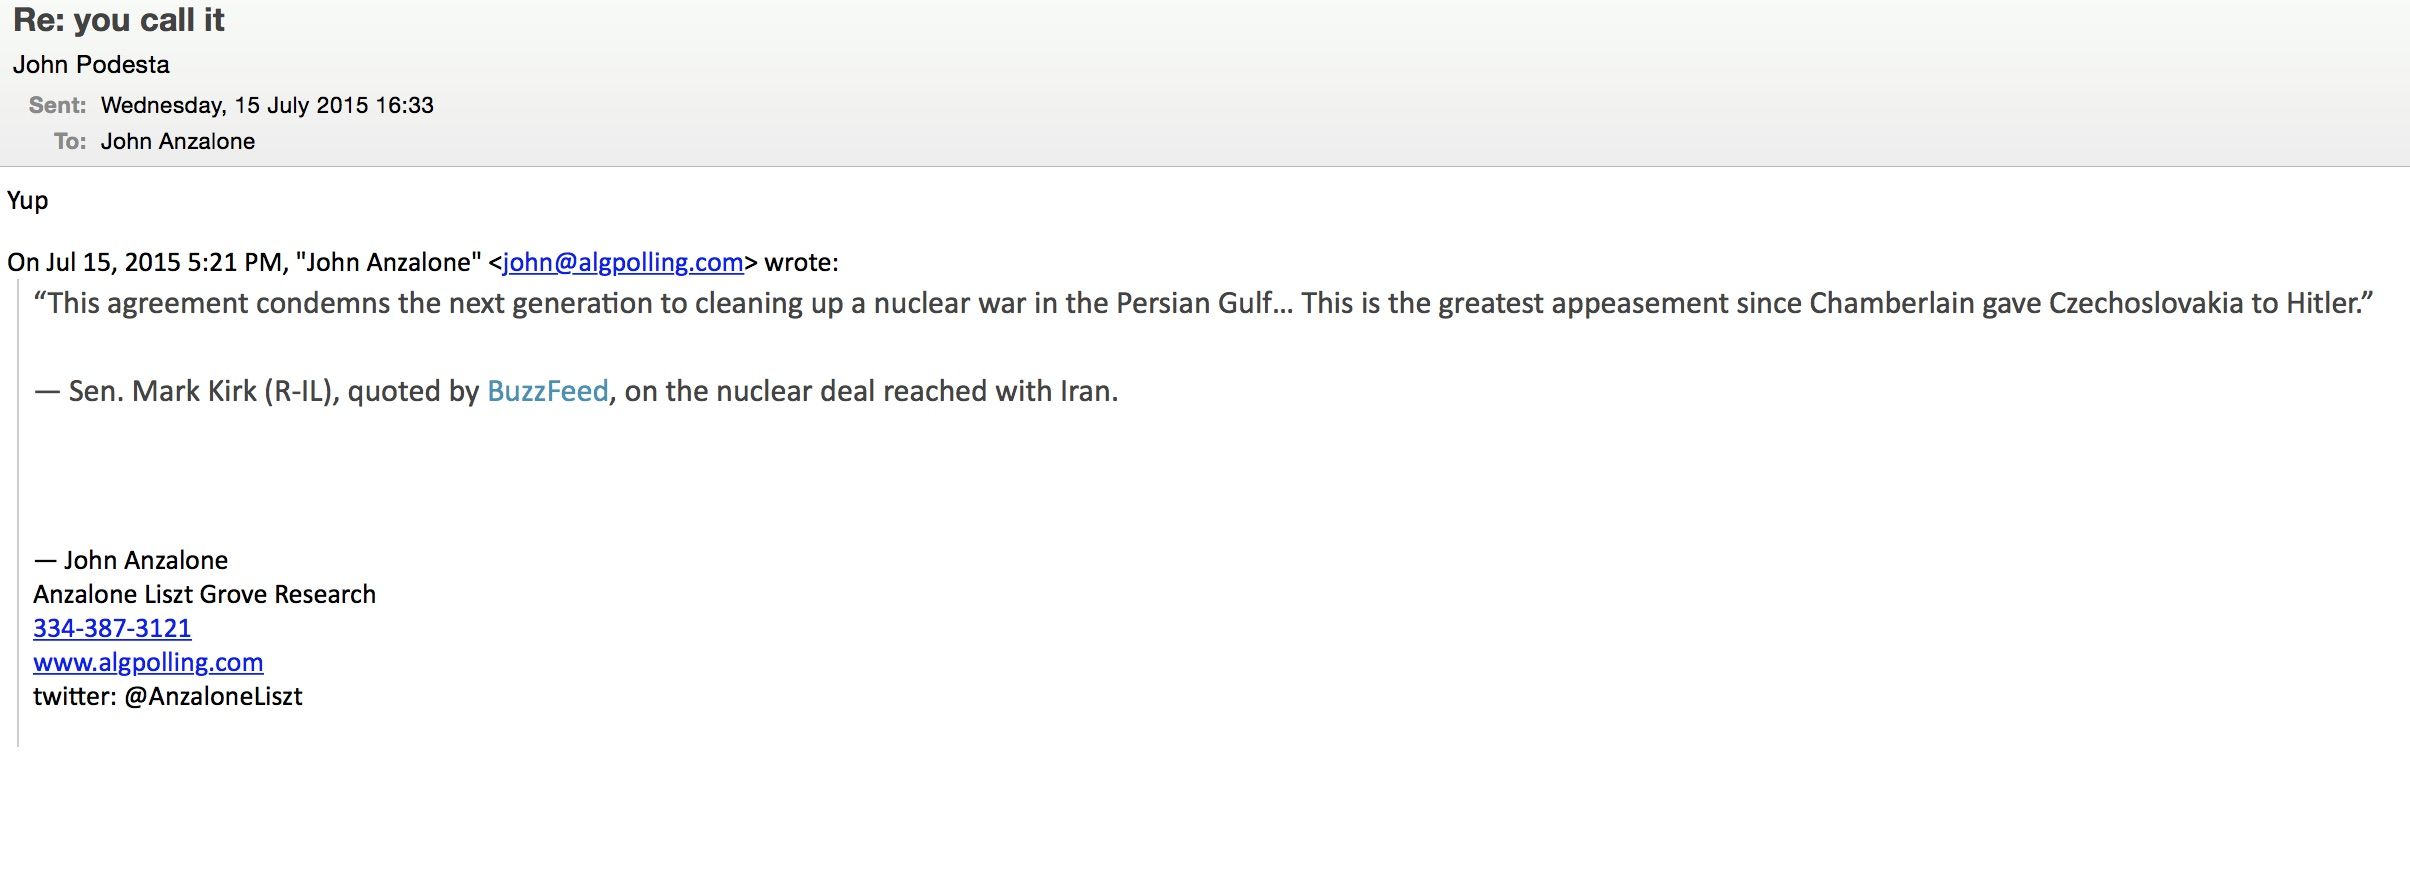 John Podesta Wikileaks email warns of 'nuclear warn' in the Persian Gulf